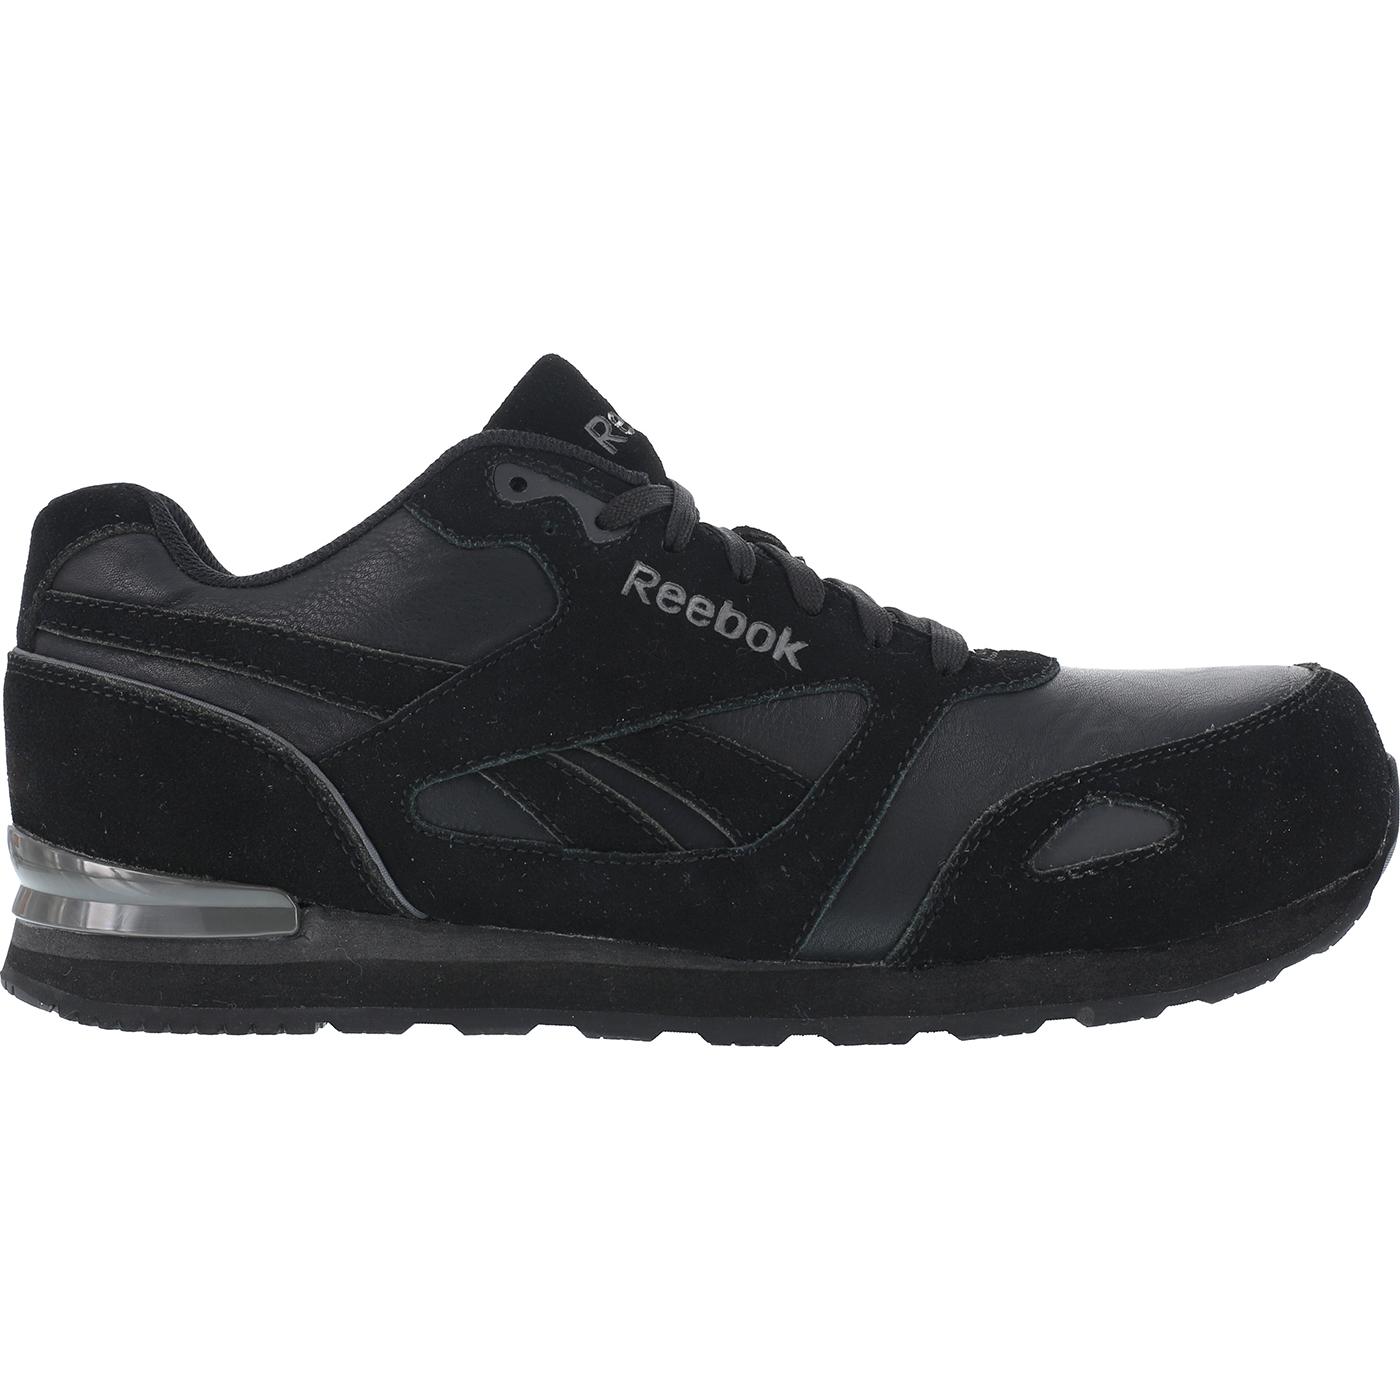 Reebok Composite Toe SlipResistant Black Work Sneaker